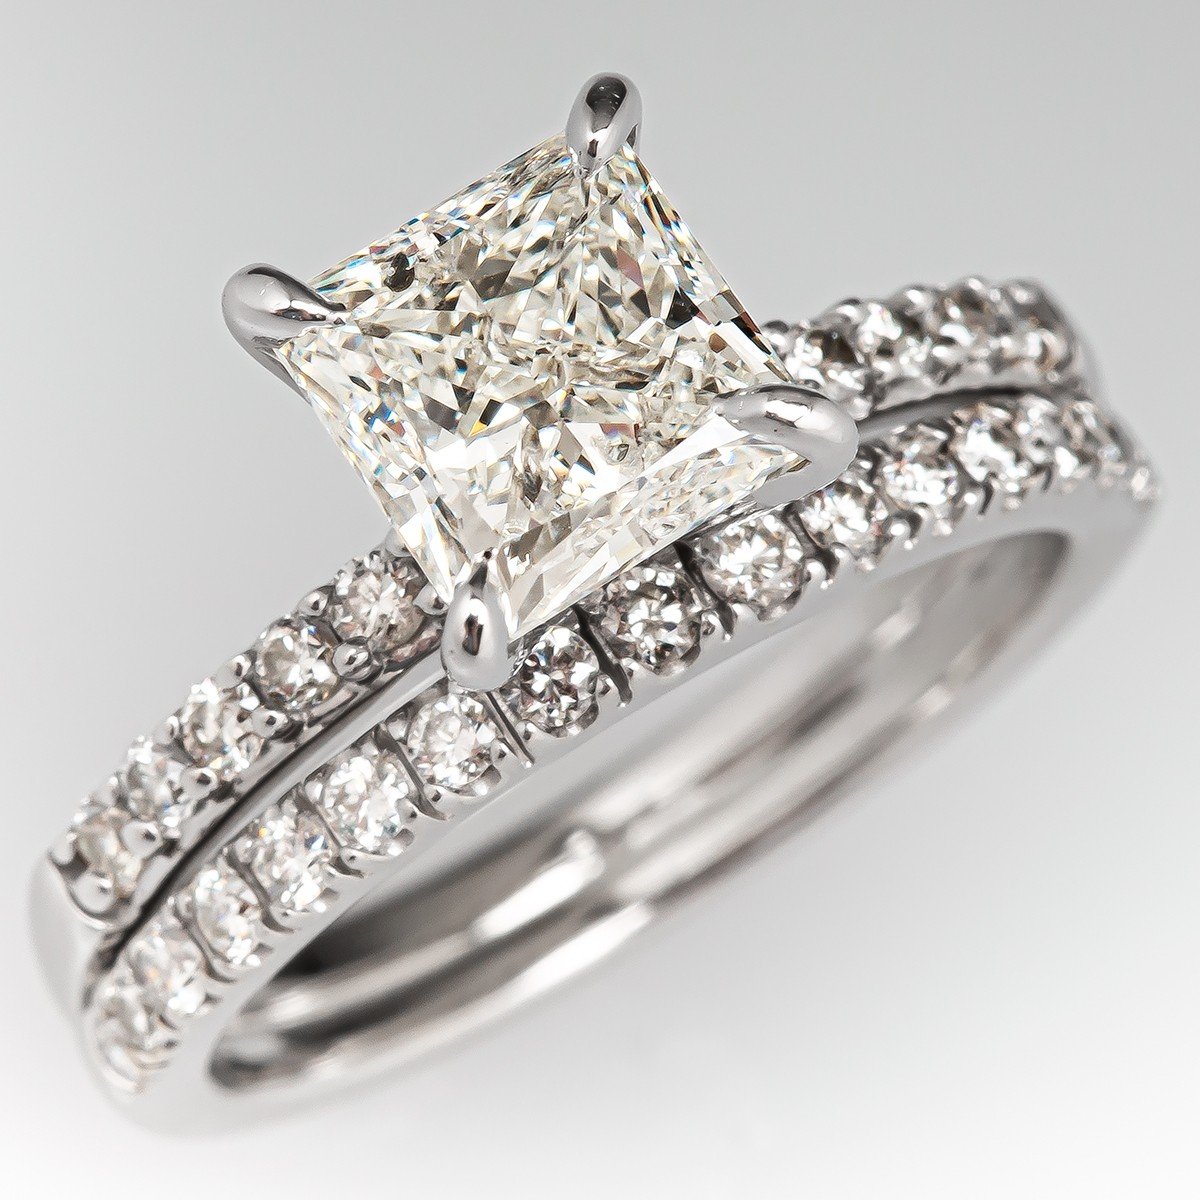 29CT PEAR SHAPED DIAMOND HALO ENGAGEMENT RING | Frassanito Jewelers